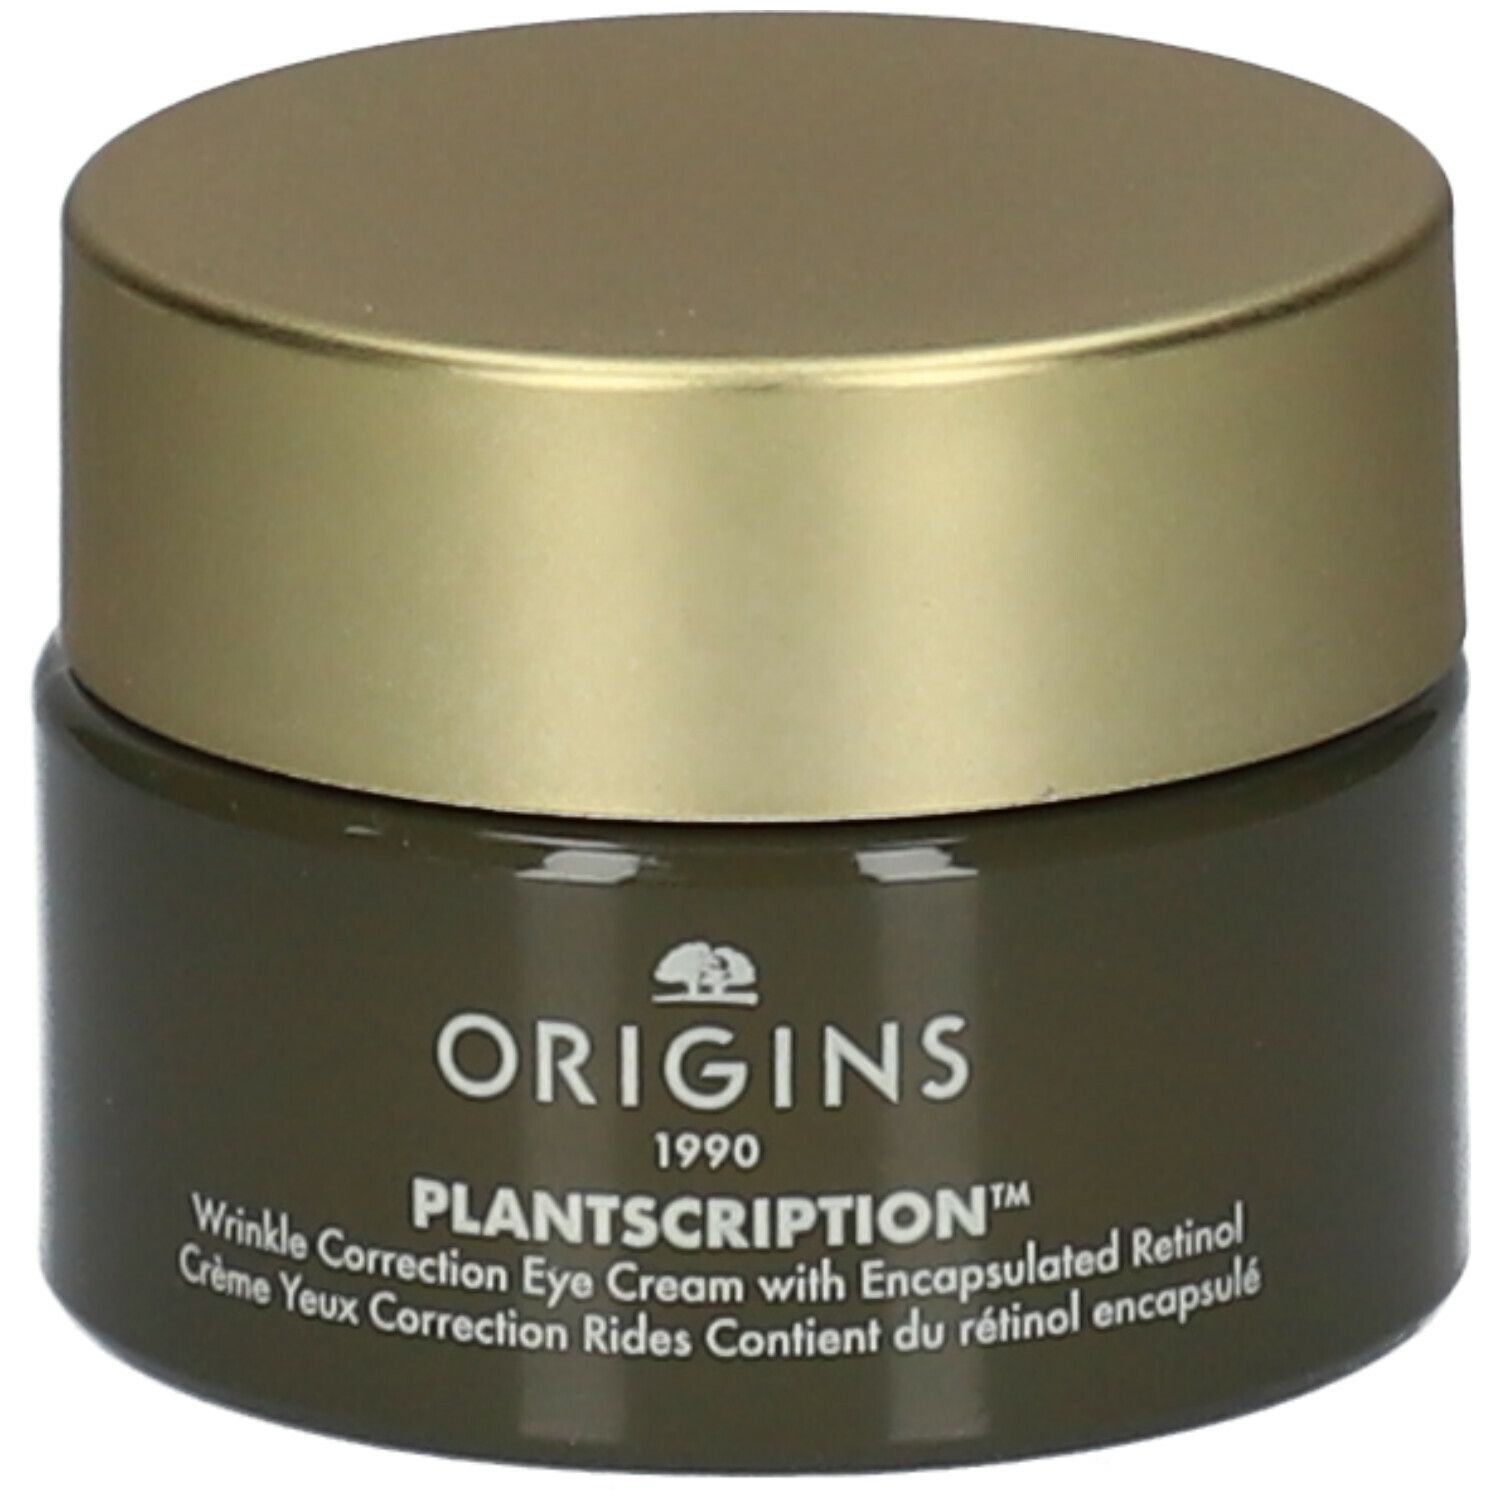 Origins Plantscription™ Wrinkle Correcting Eye Cream with Encapsulated Retinol